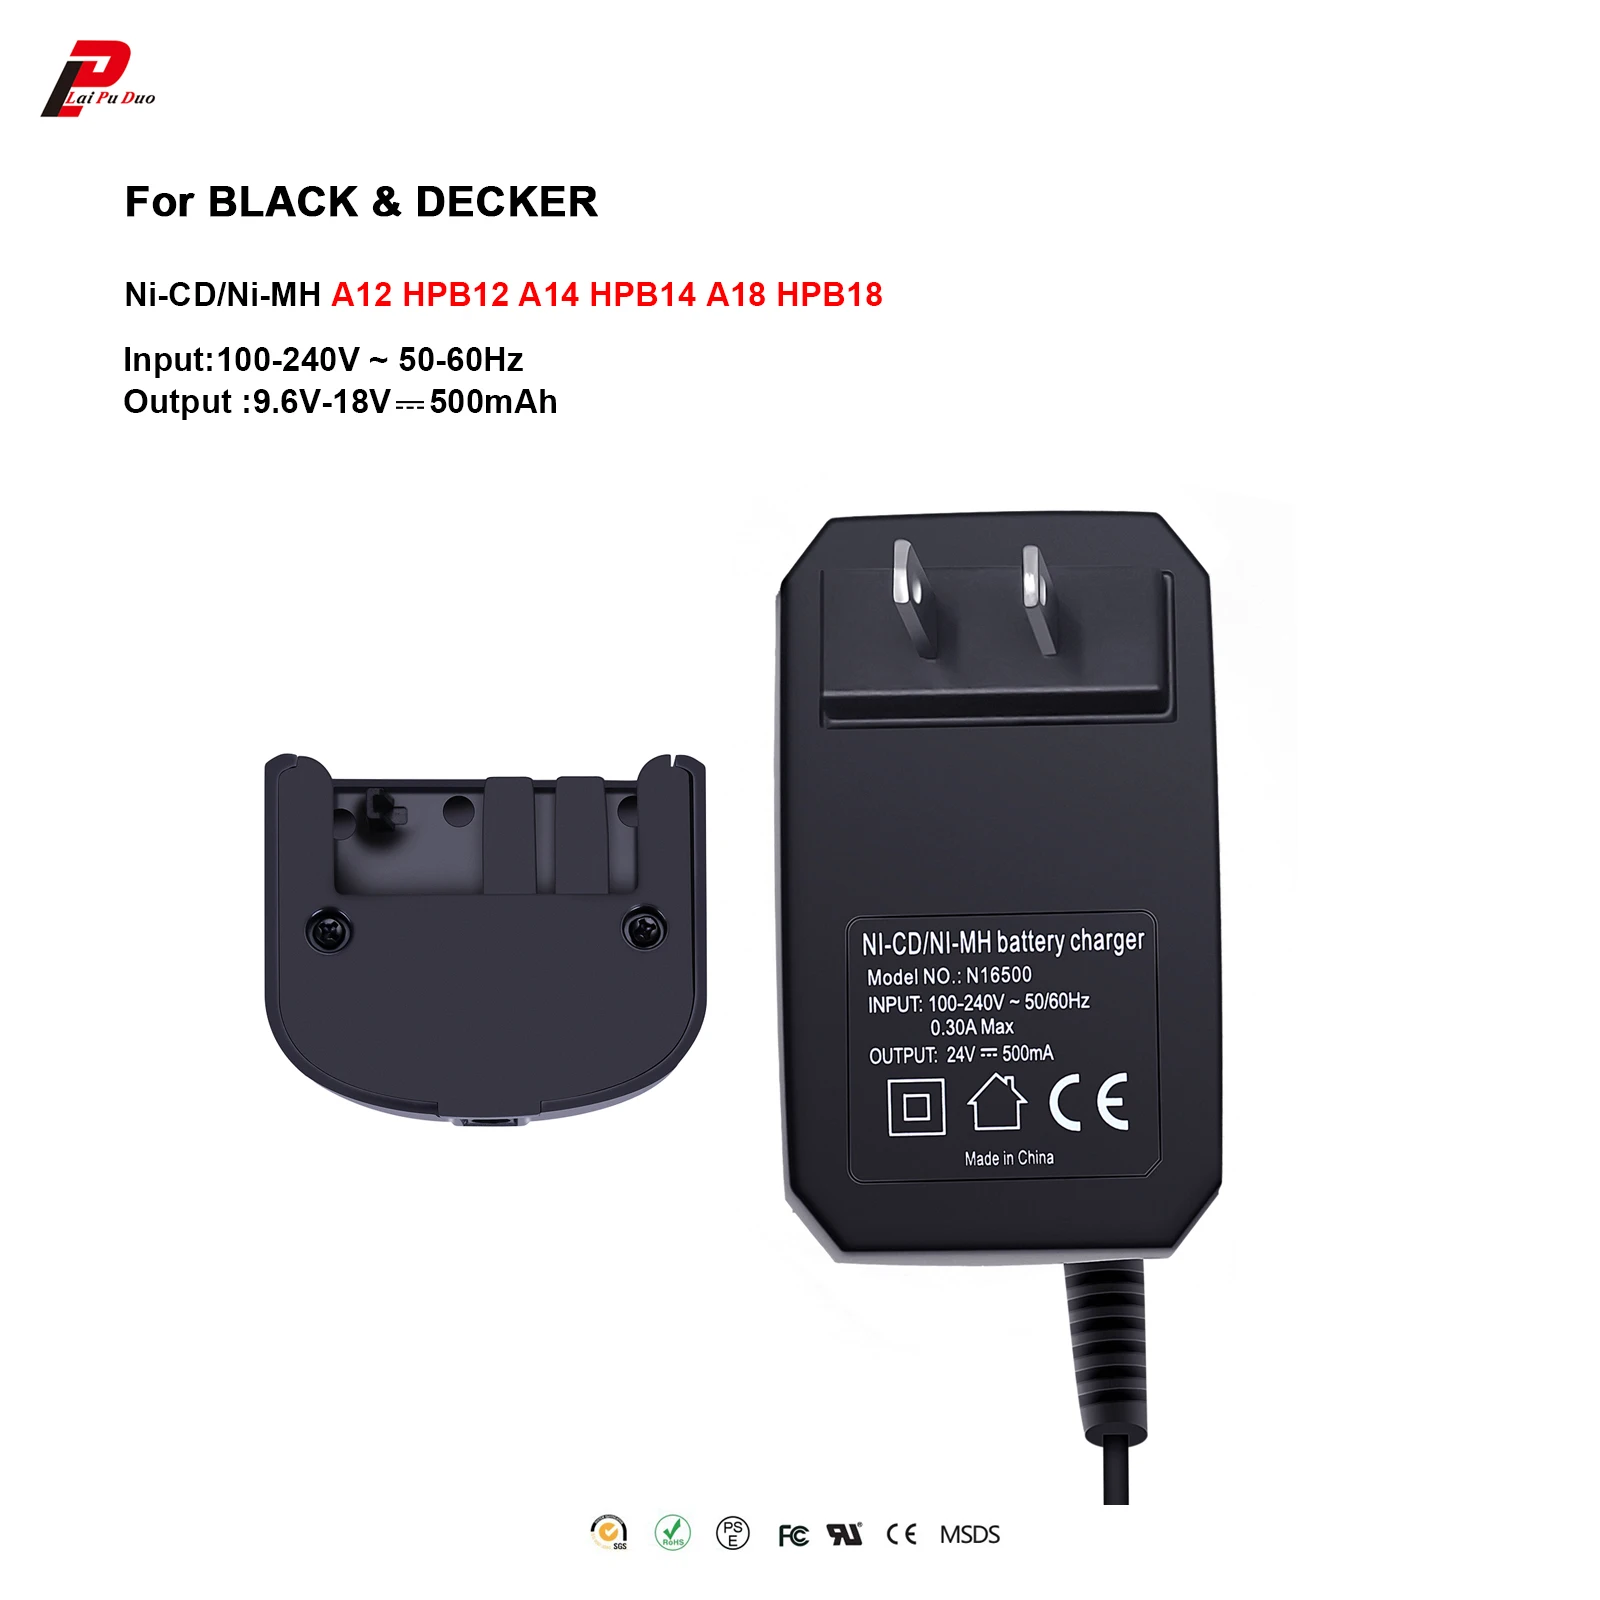 https://ae01.alicdn.com/kf/S1577a18f7d71444ca8579549a83eace15/For-Black-Decker-A12-A14-A18-HPB18-9-6V-12V-14-4V-18V-Battery-Charger-Ni.jpg